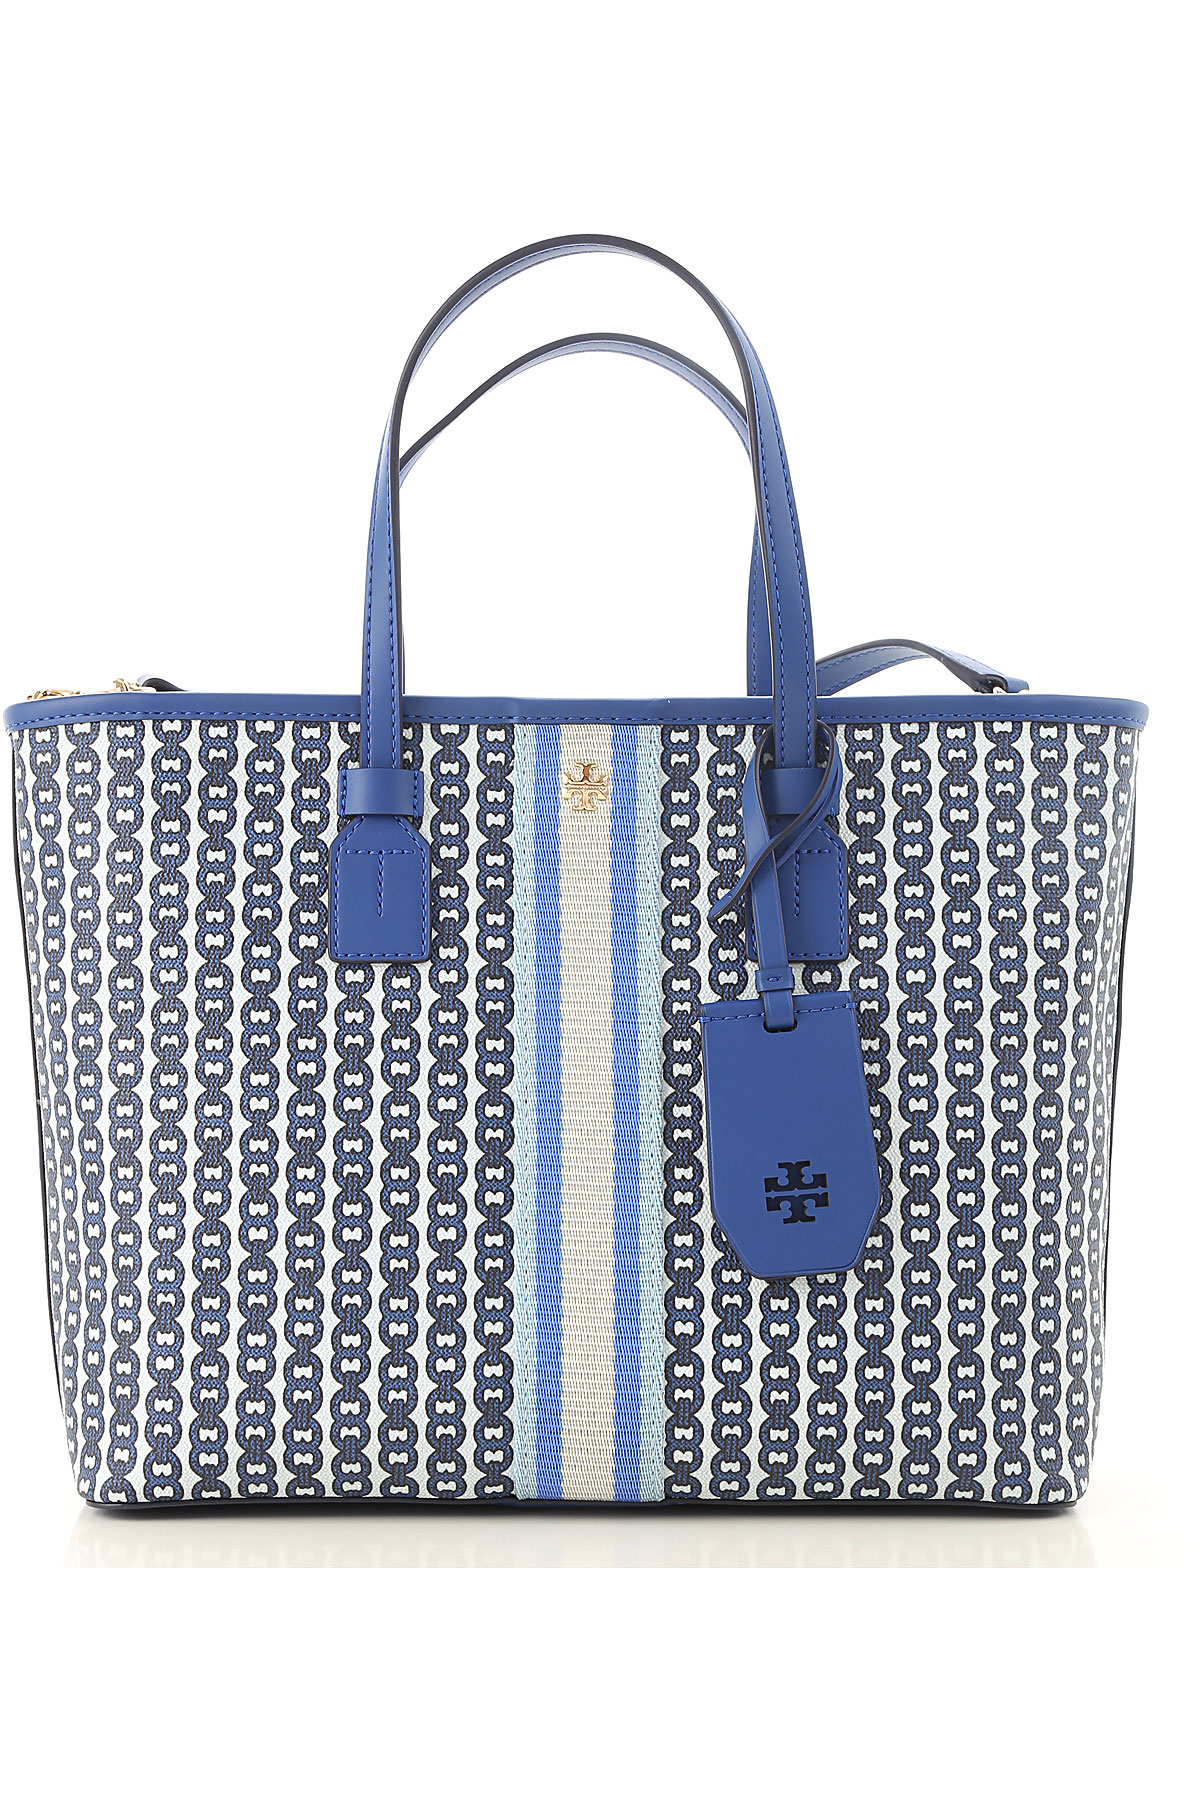 Handbags Tory Burch, Style code: 53304-453-